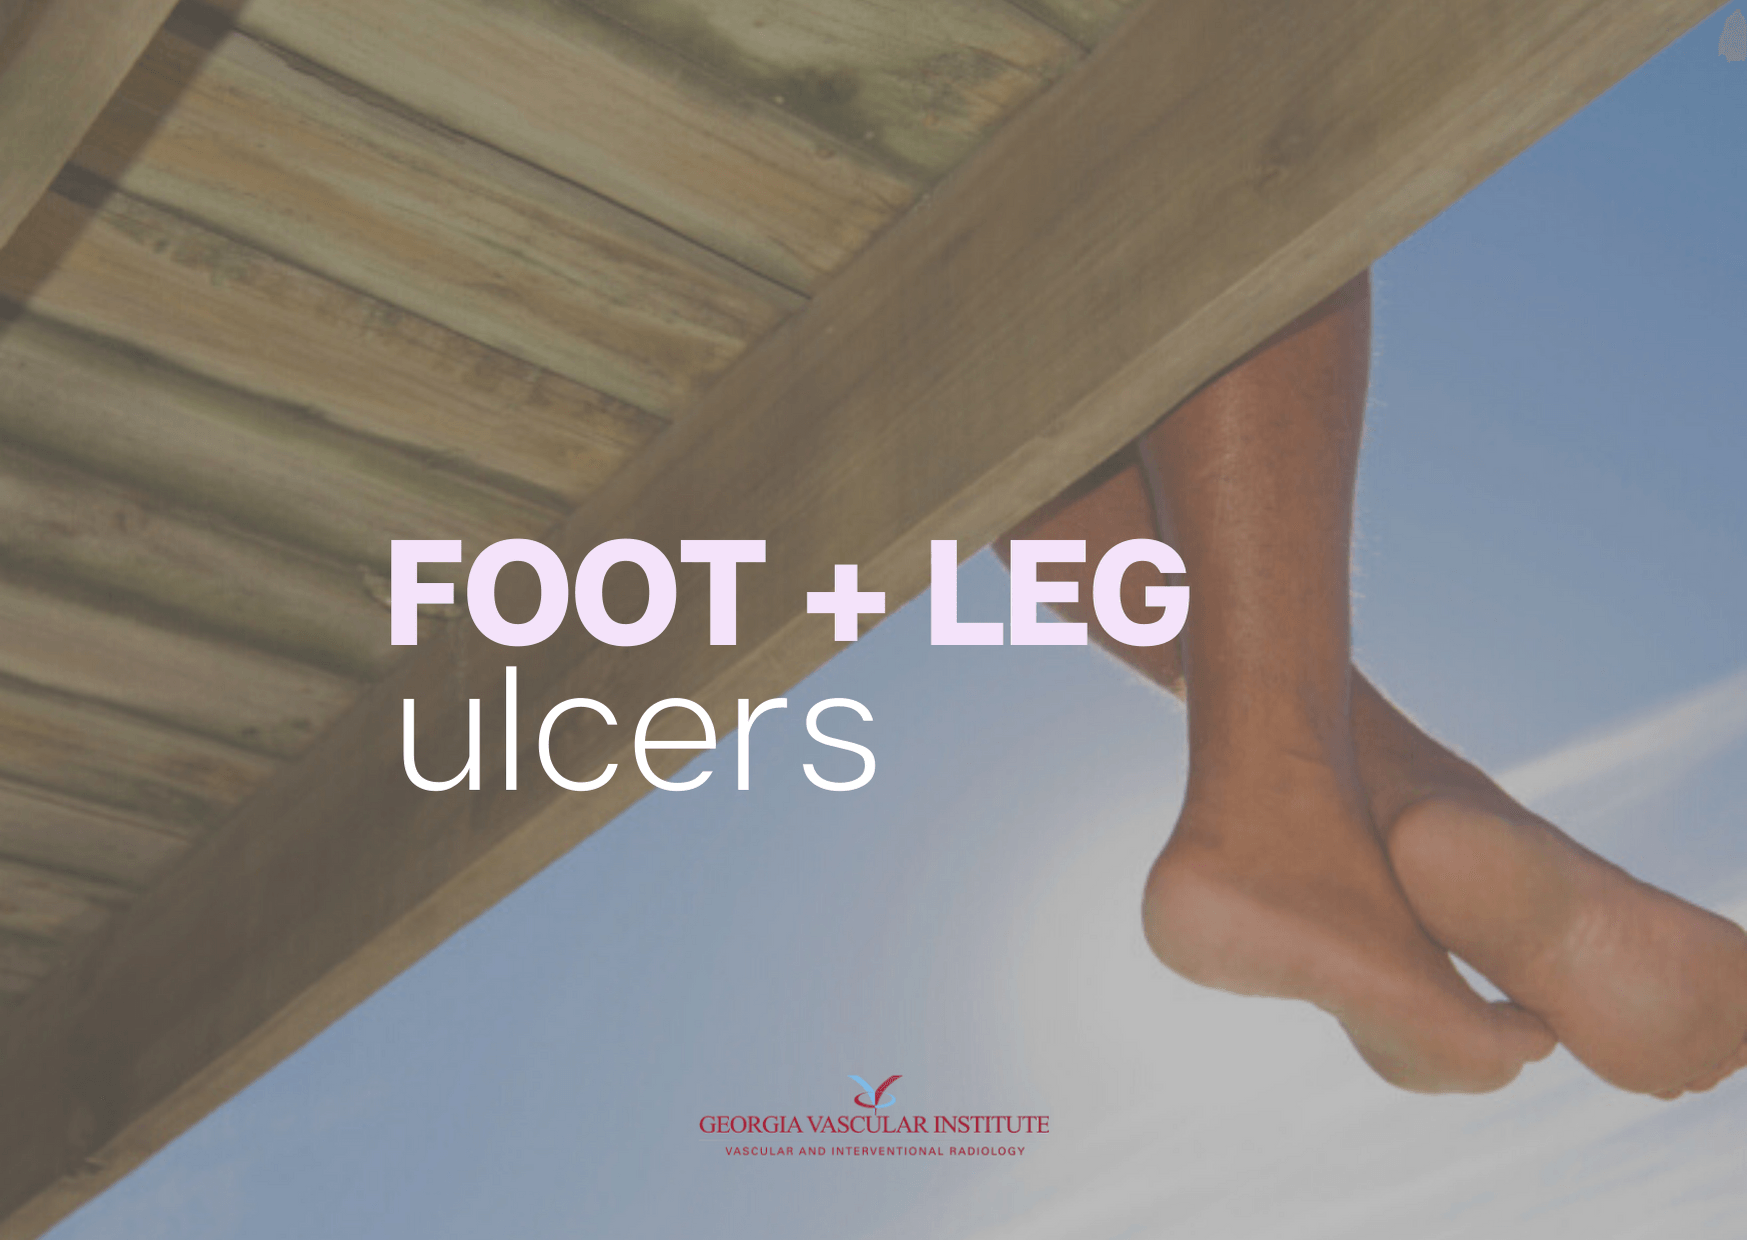 foot and leg ulcers treatment georgia vascular institute